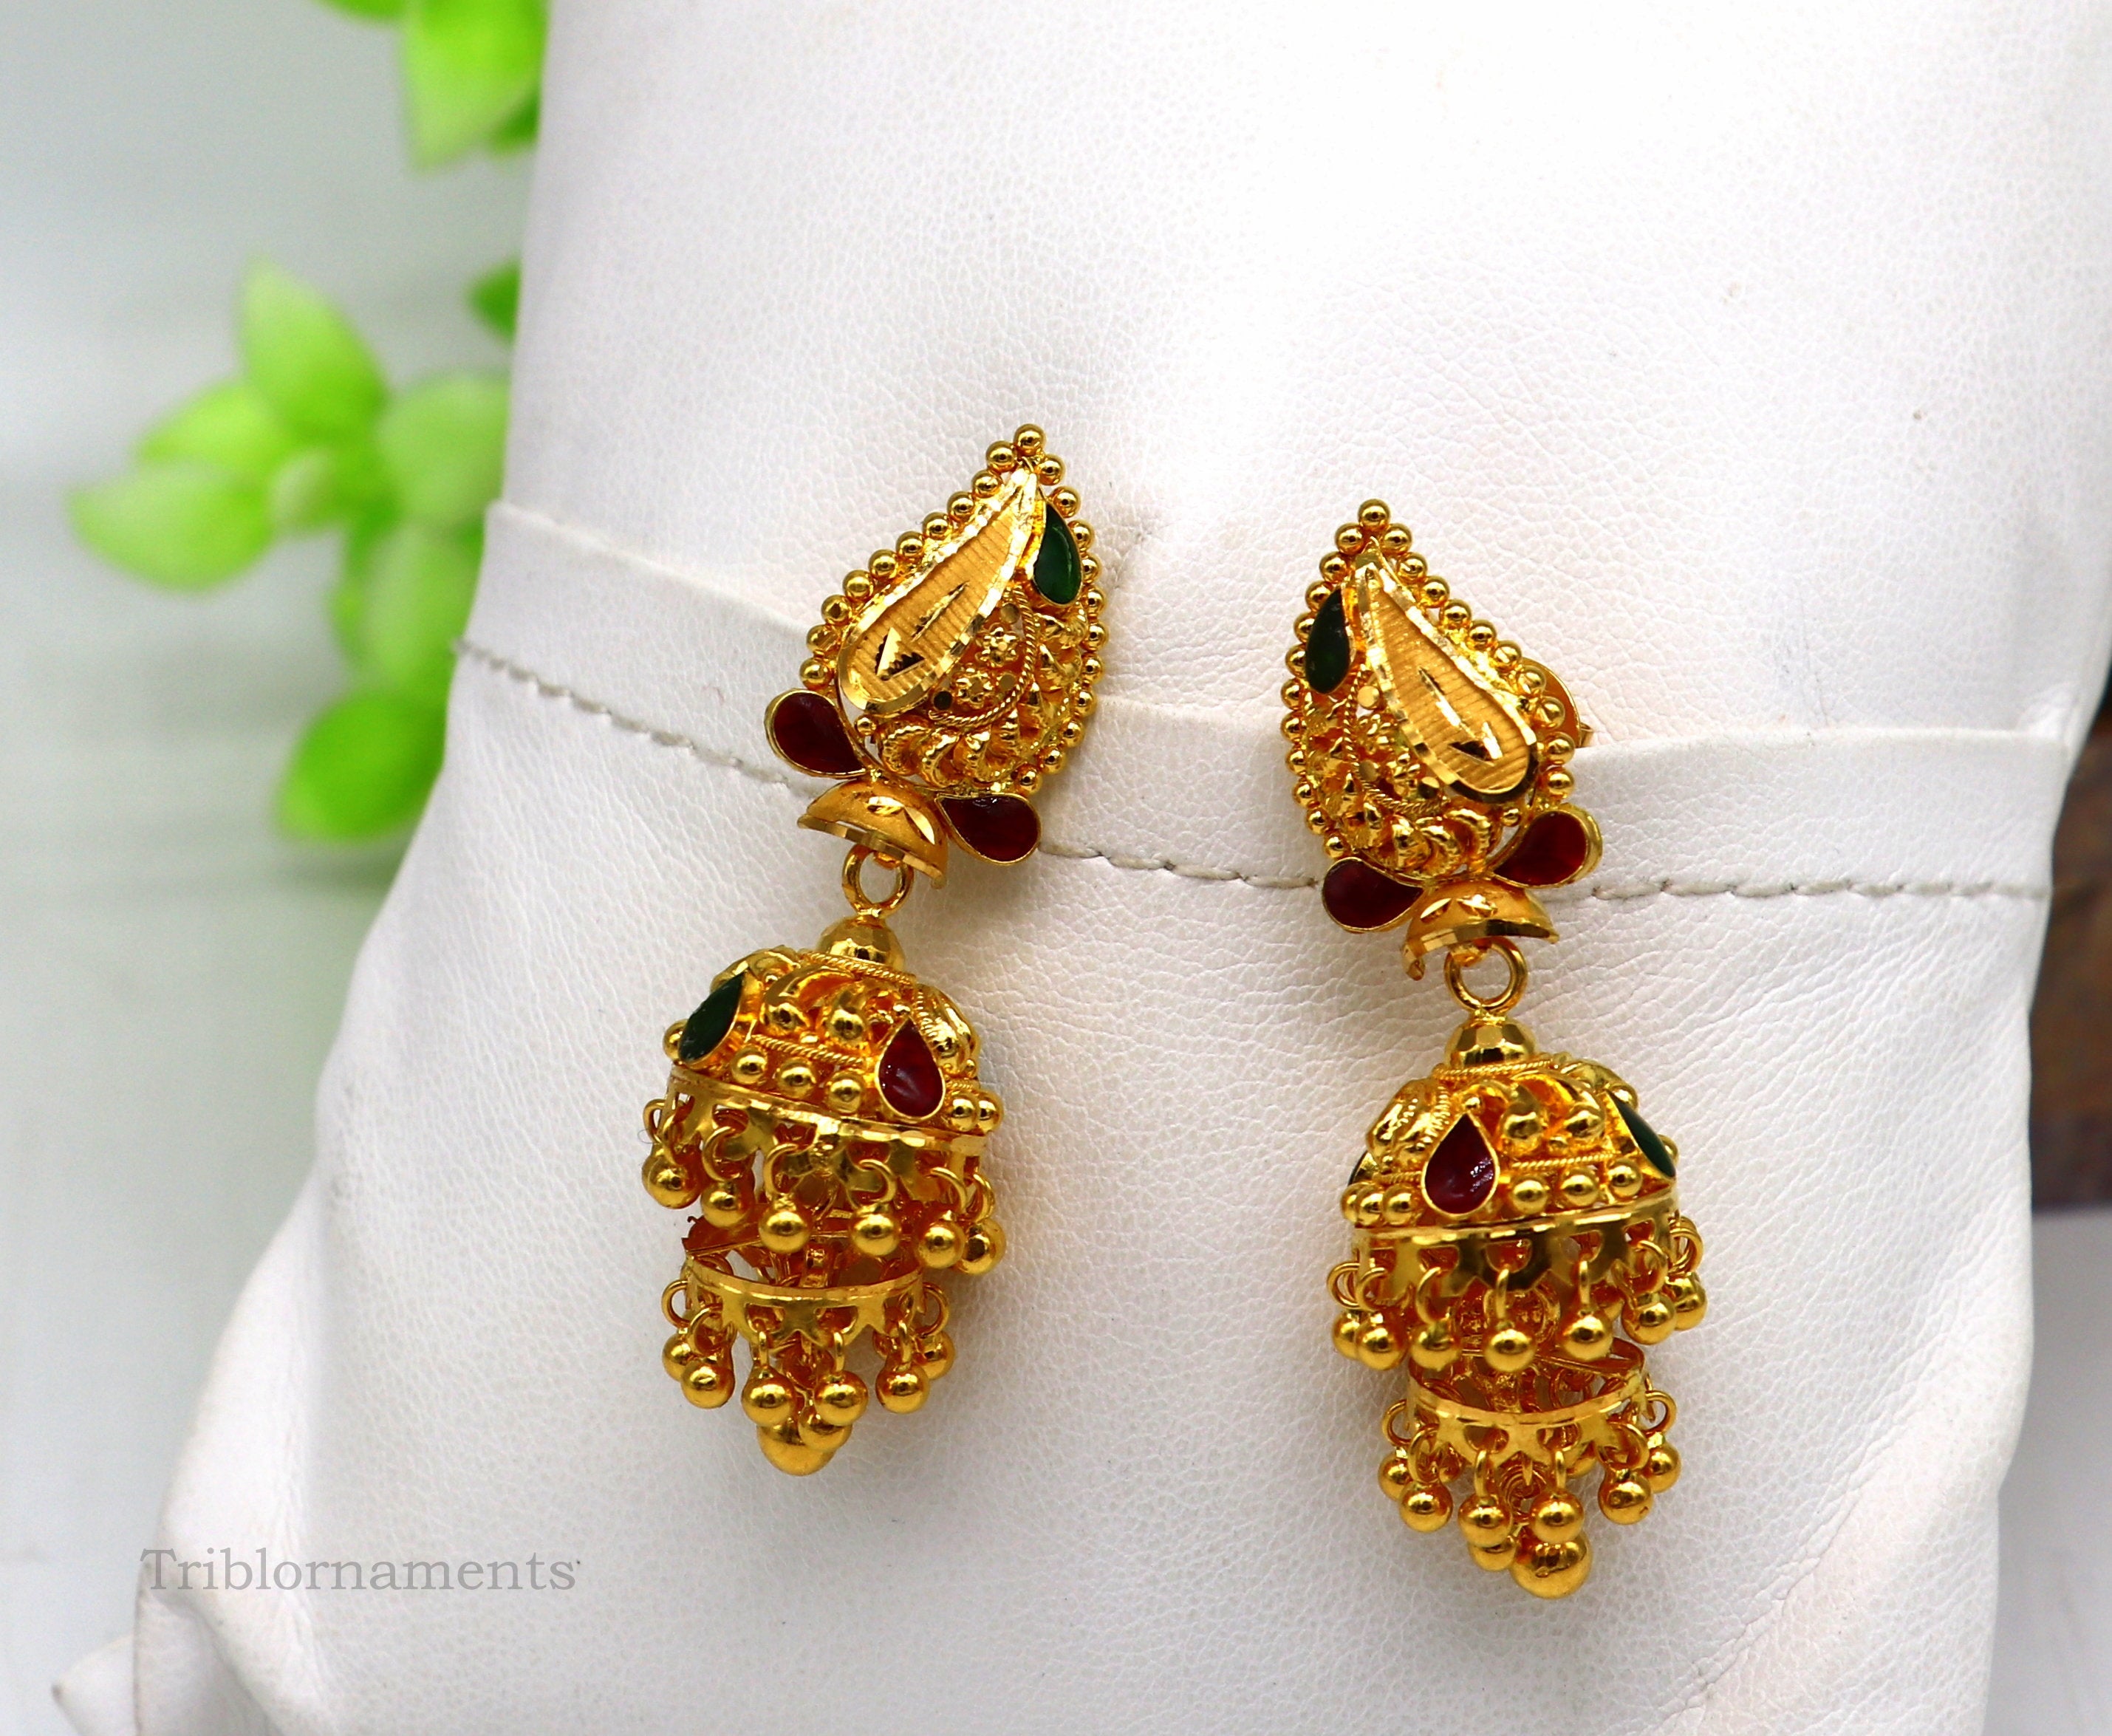 Yellow Earrings Design - Gold Stud Earrings - Stud Earrings for Girls - Jia  Stud Earrings by Blingvine